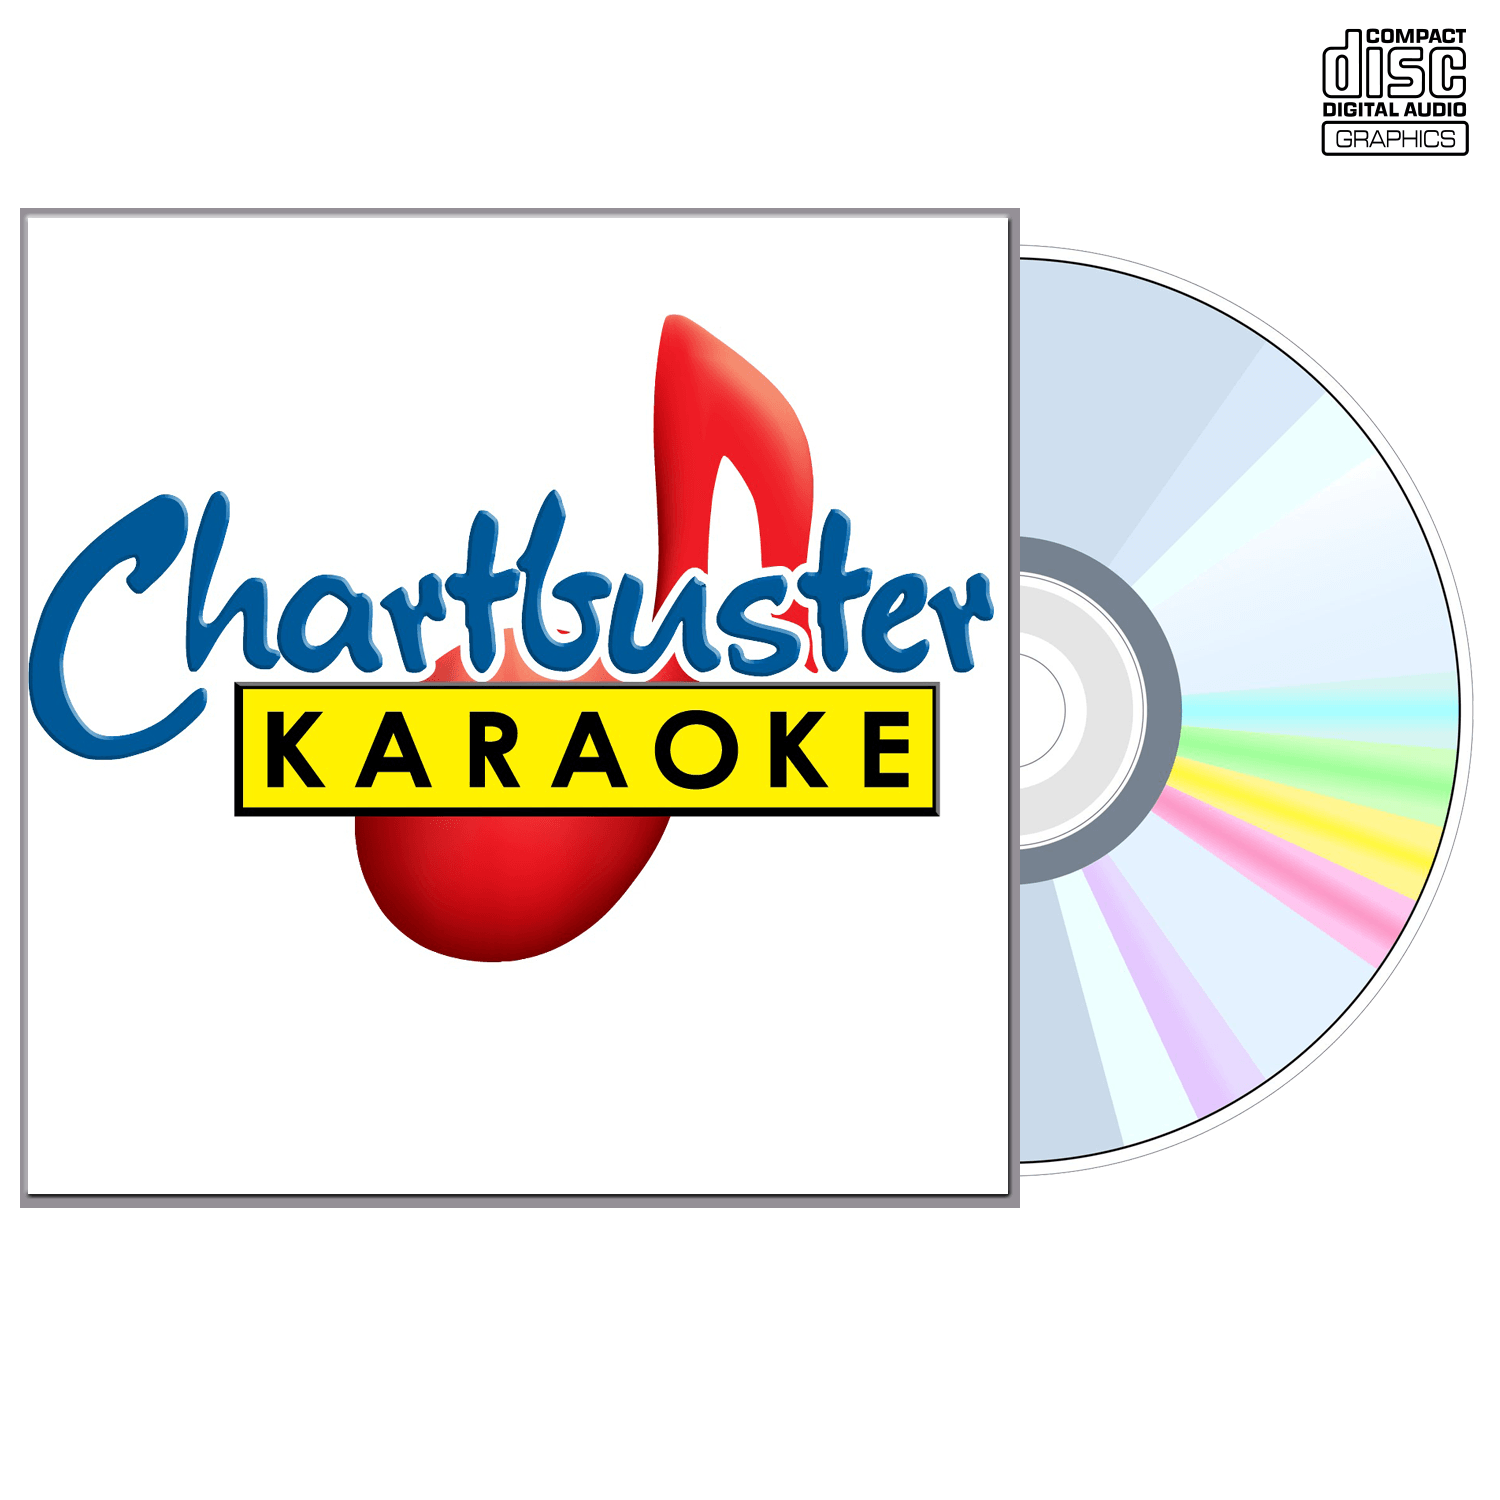 70's 10 Disc Set Vol 02 - CD+G - Chartbuster Karaoke - Karaoke Home Entertainment